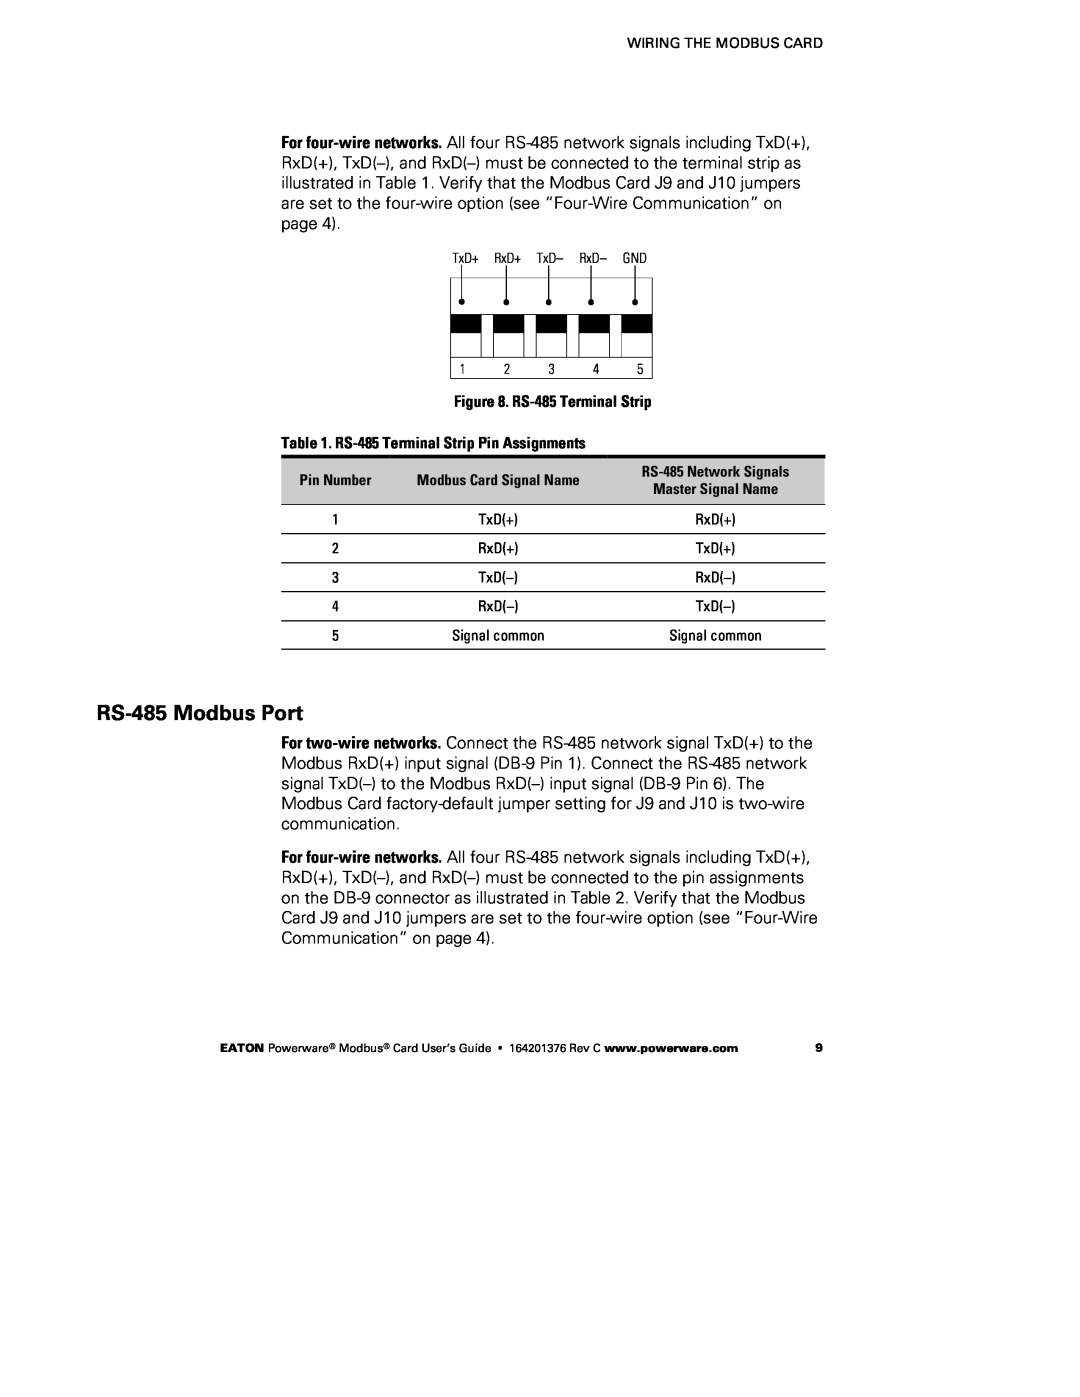 Powerware FCC 15 manual RS-485 Modbus Port, RS-485 Terminal Strip Pin Assignments 